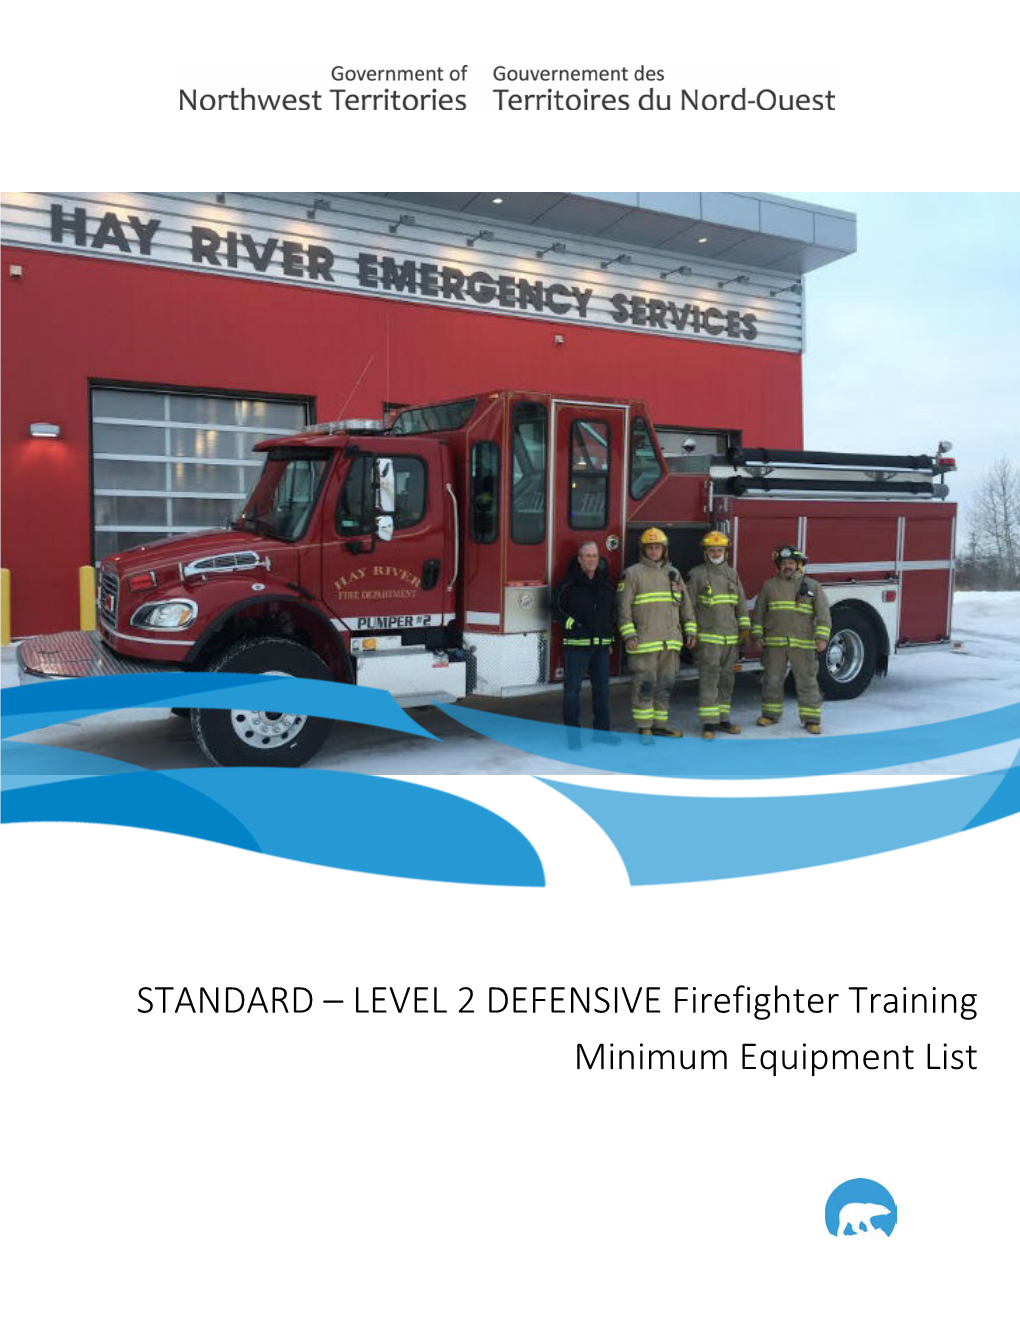 LEVEL 2 DEFENSIVE Standard Firefighter Training I Minimum